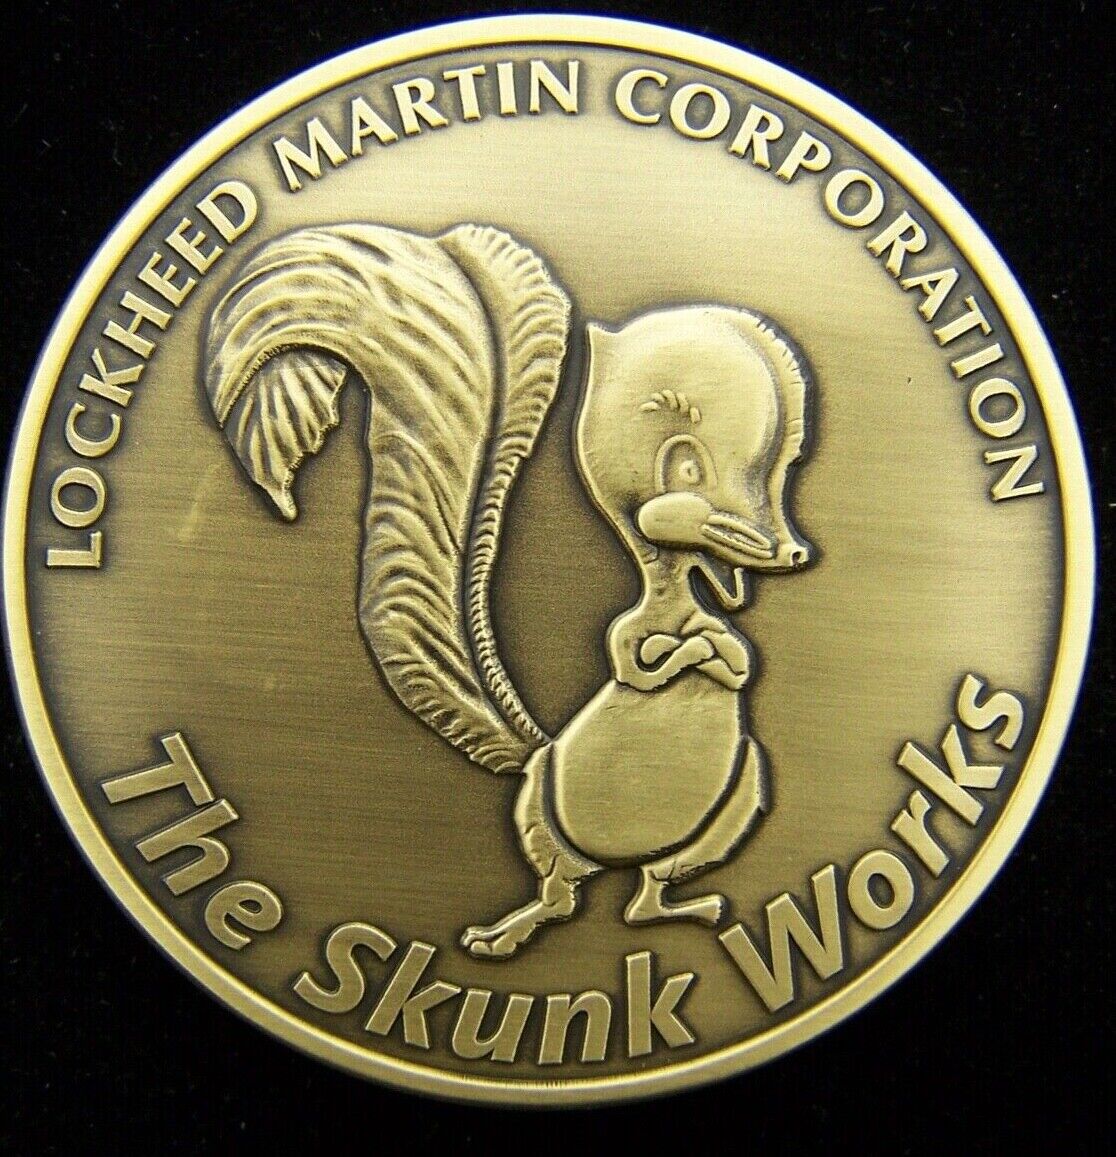 Skunk Works U2 Dragon Lady CIA Spy Plane Challenge Coin